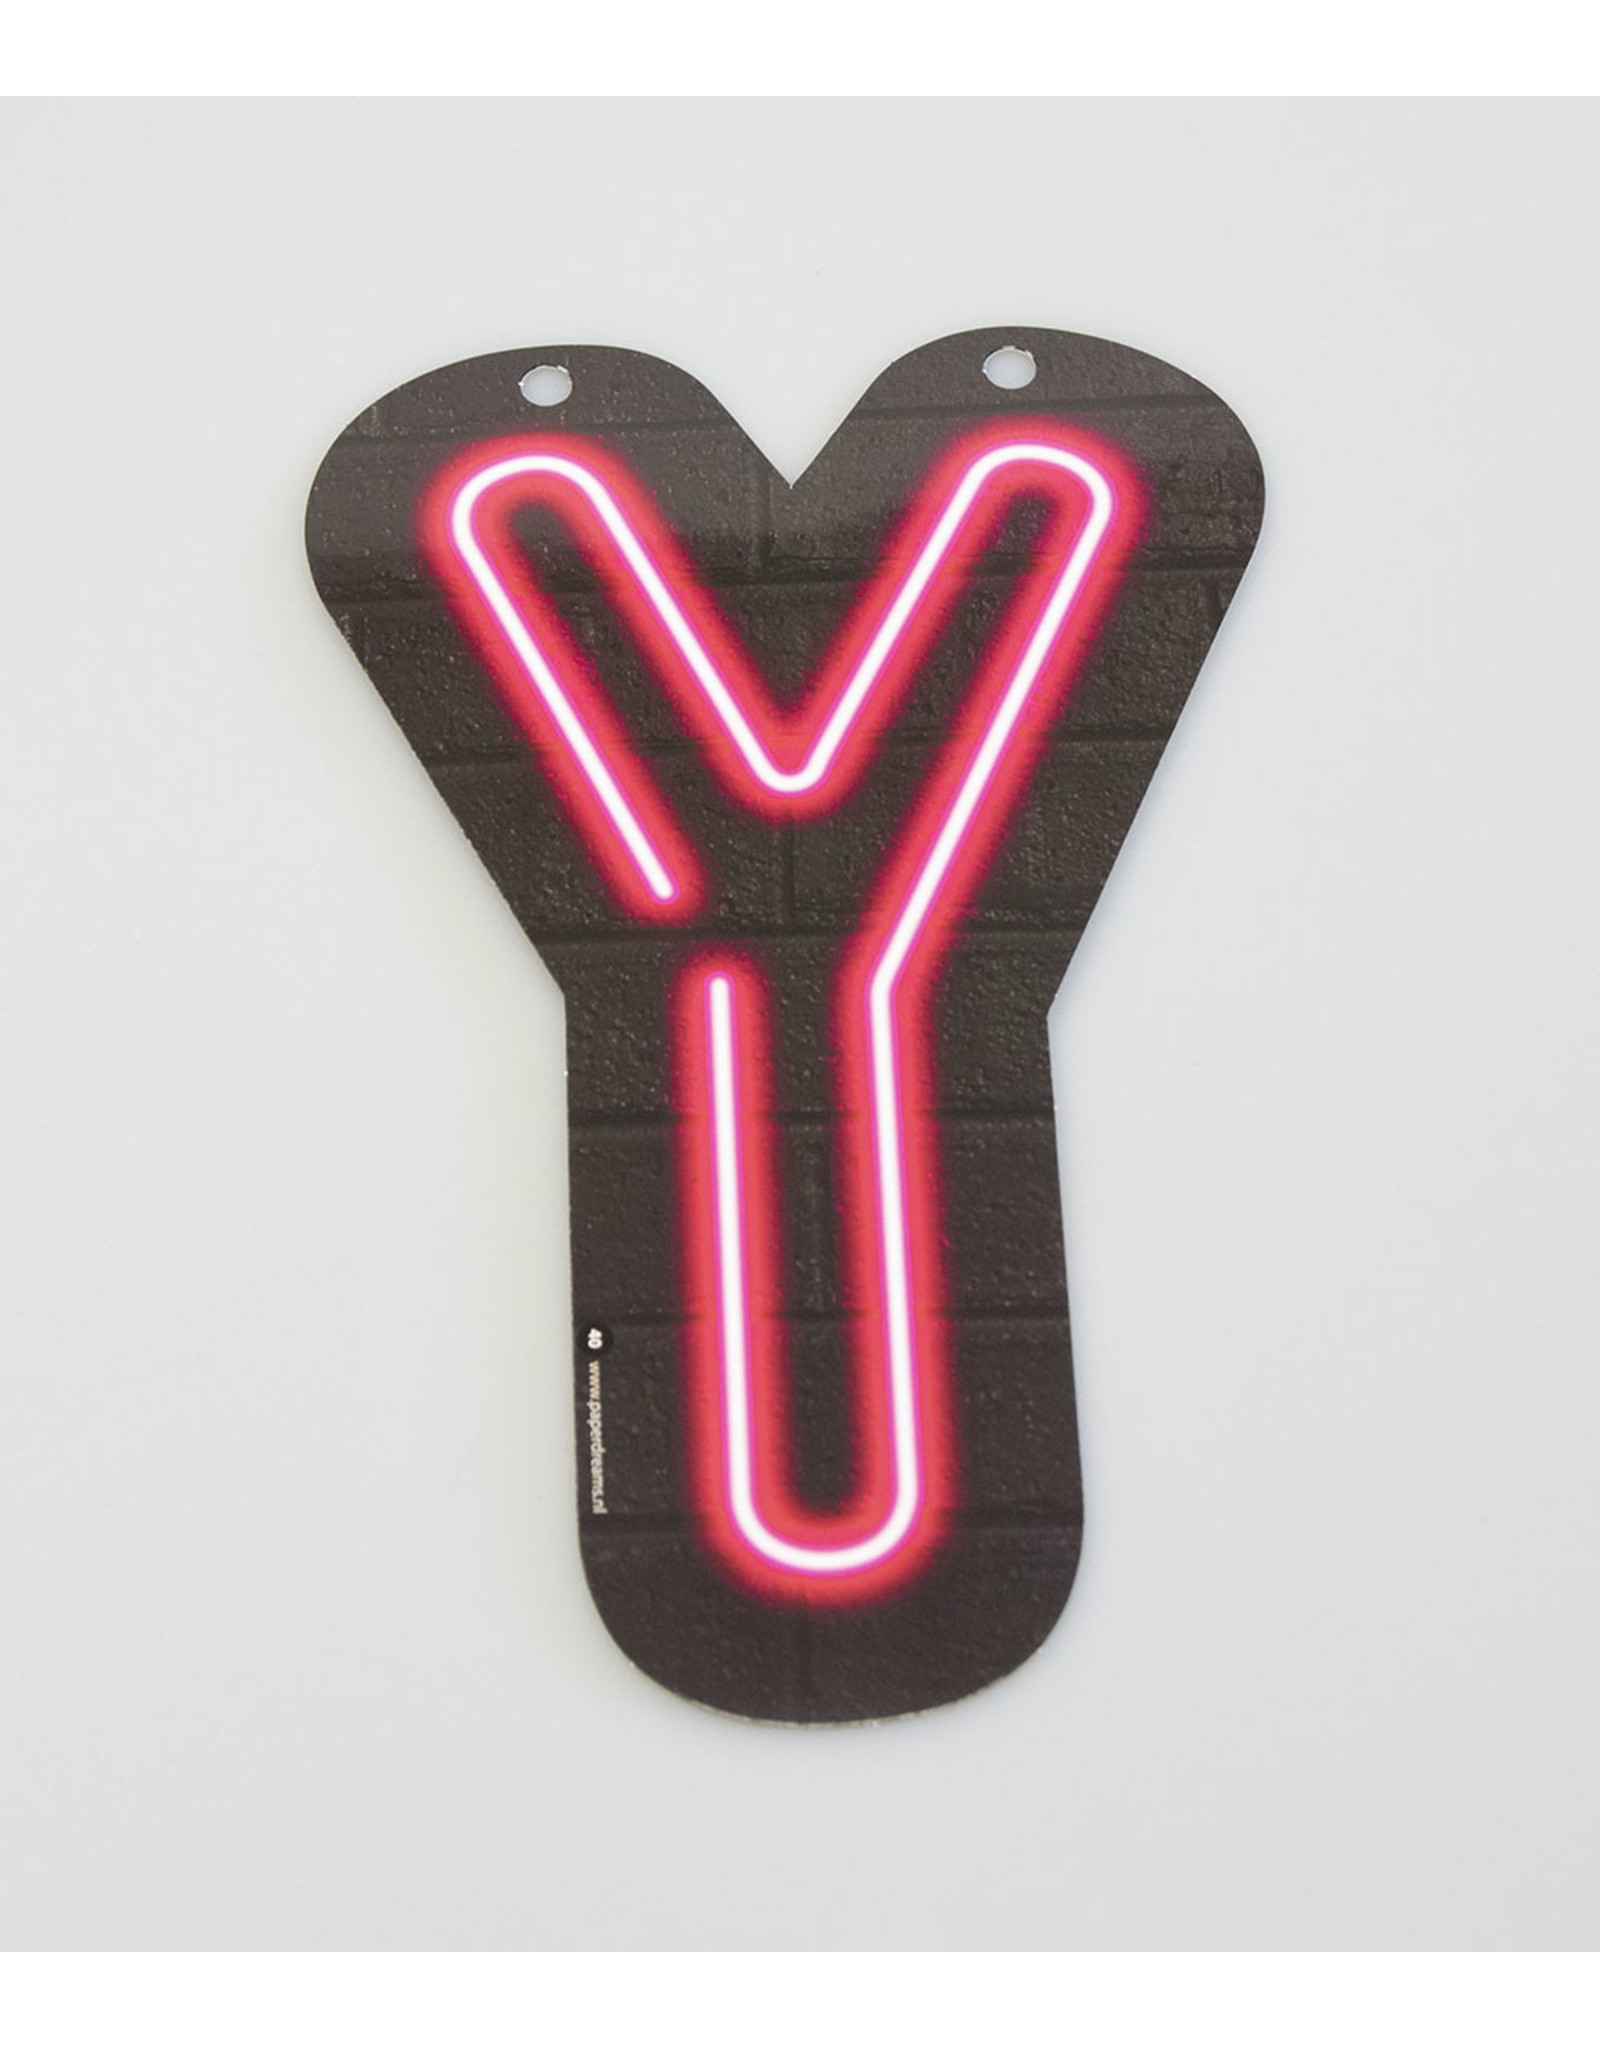 Neon letter - Y